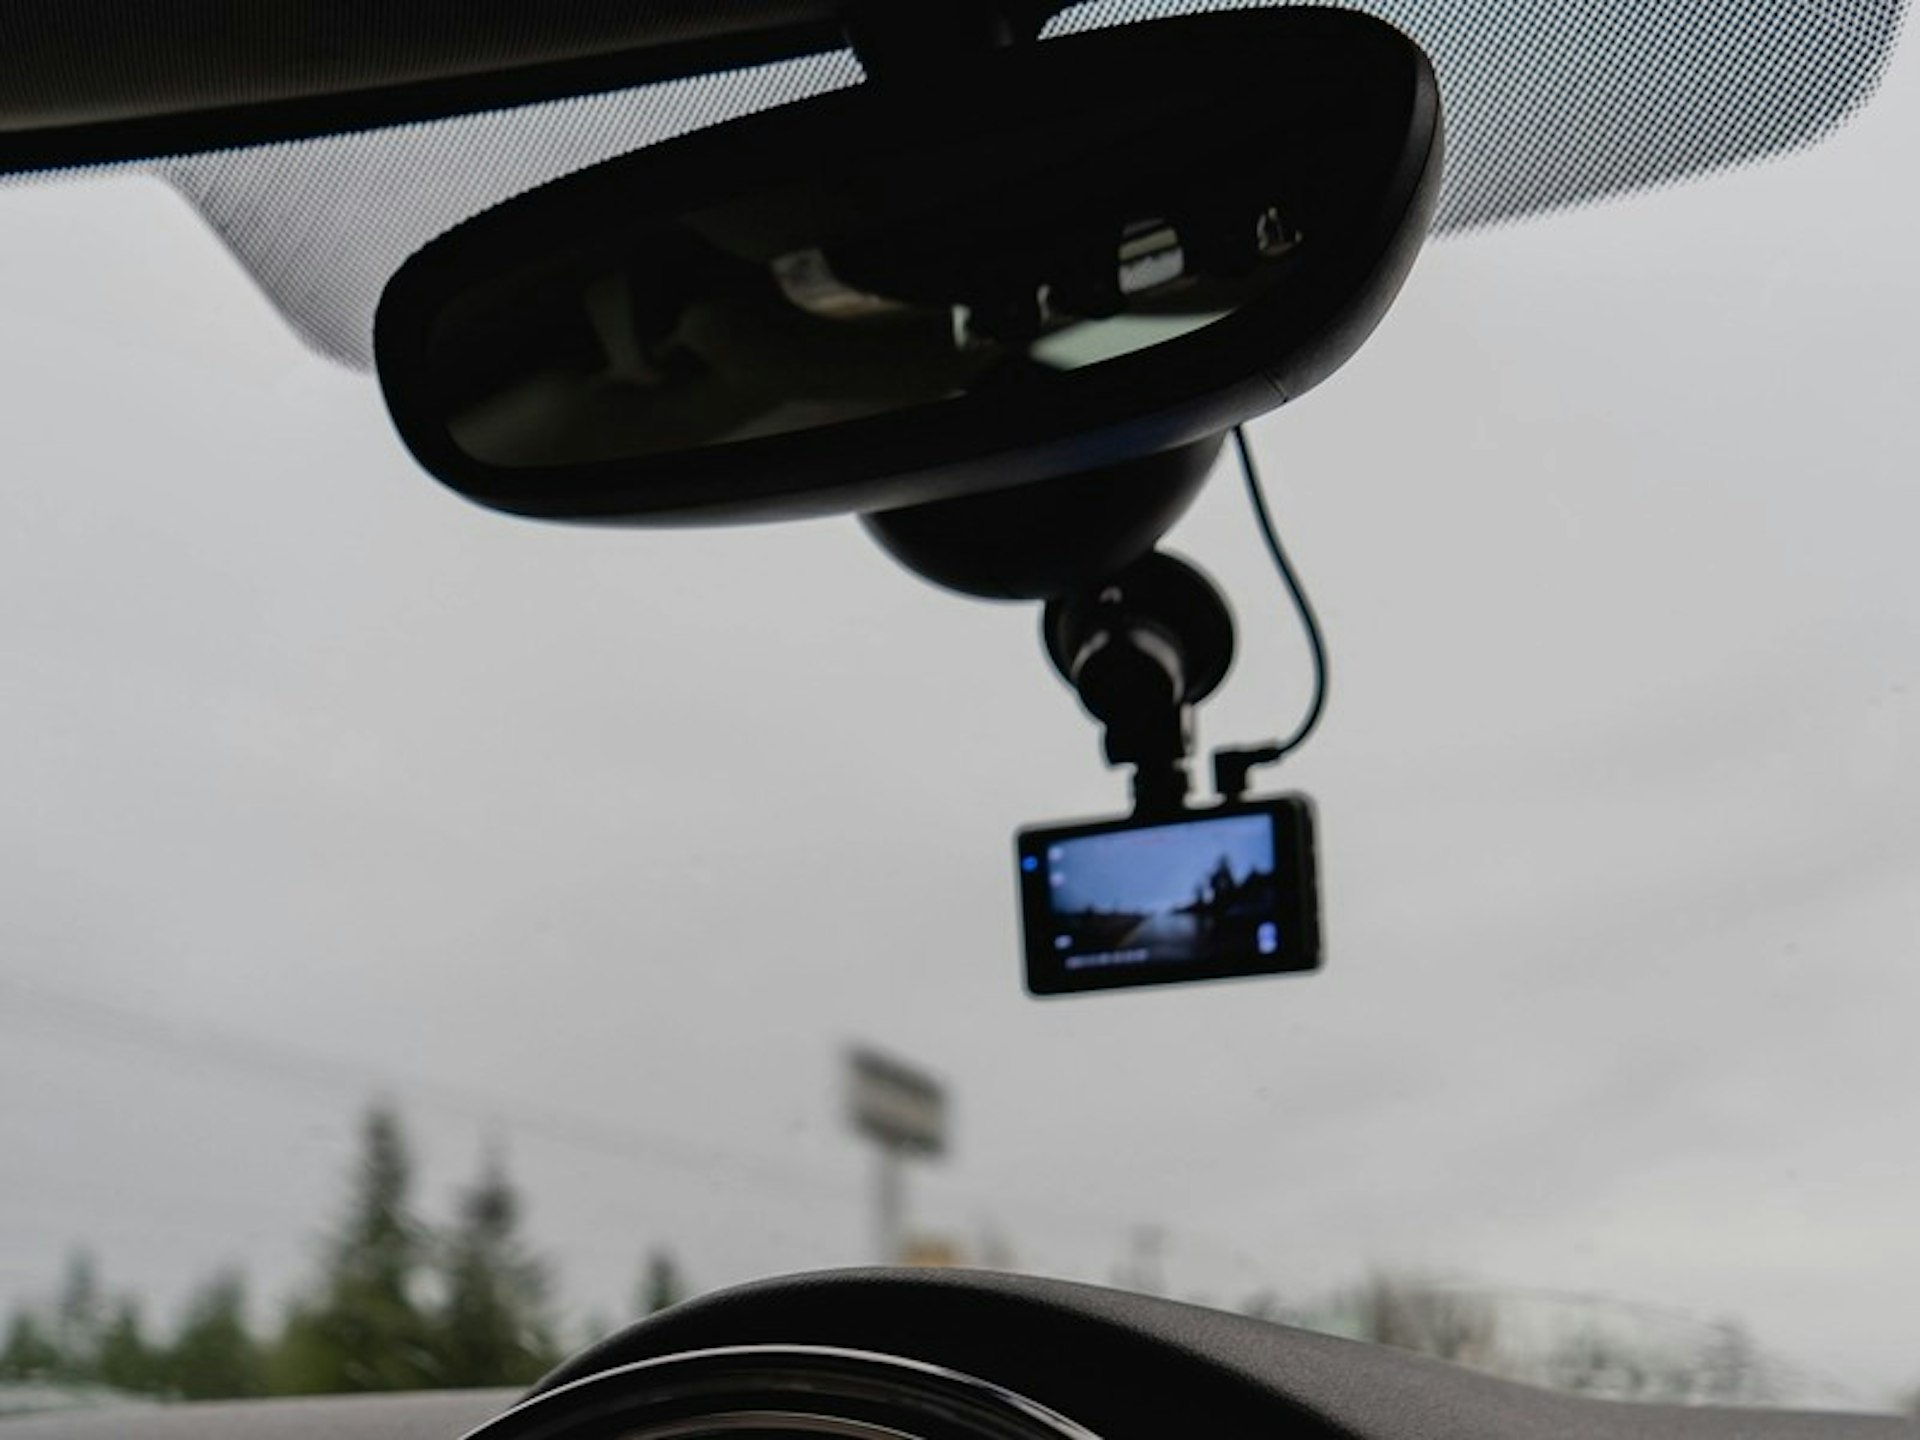 A windshield mounted dashcam